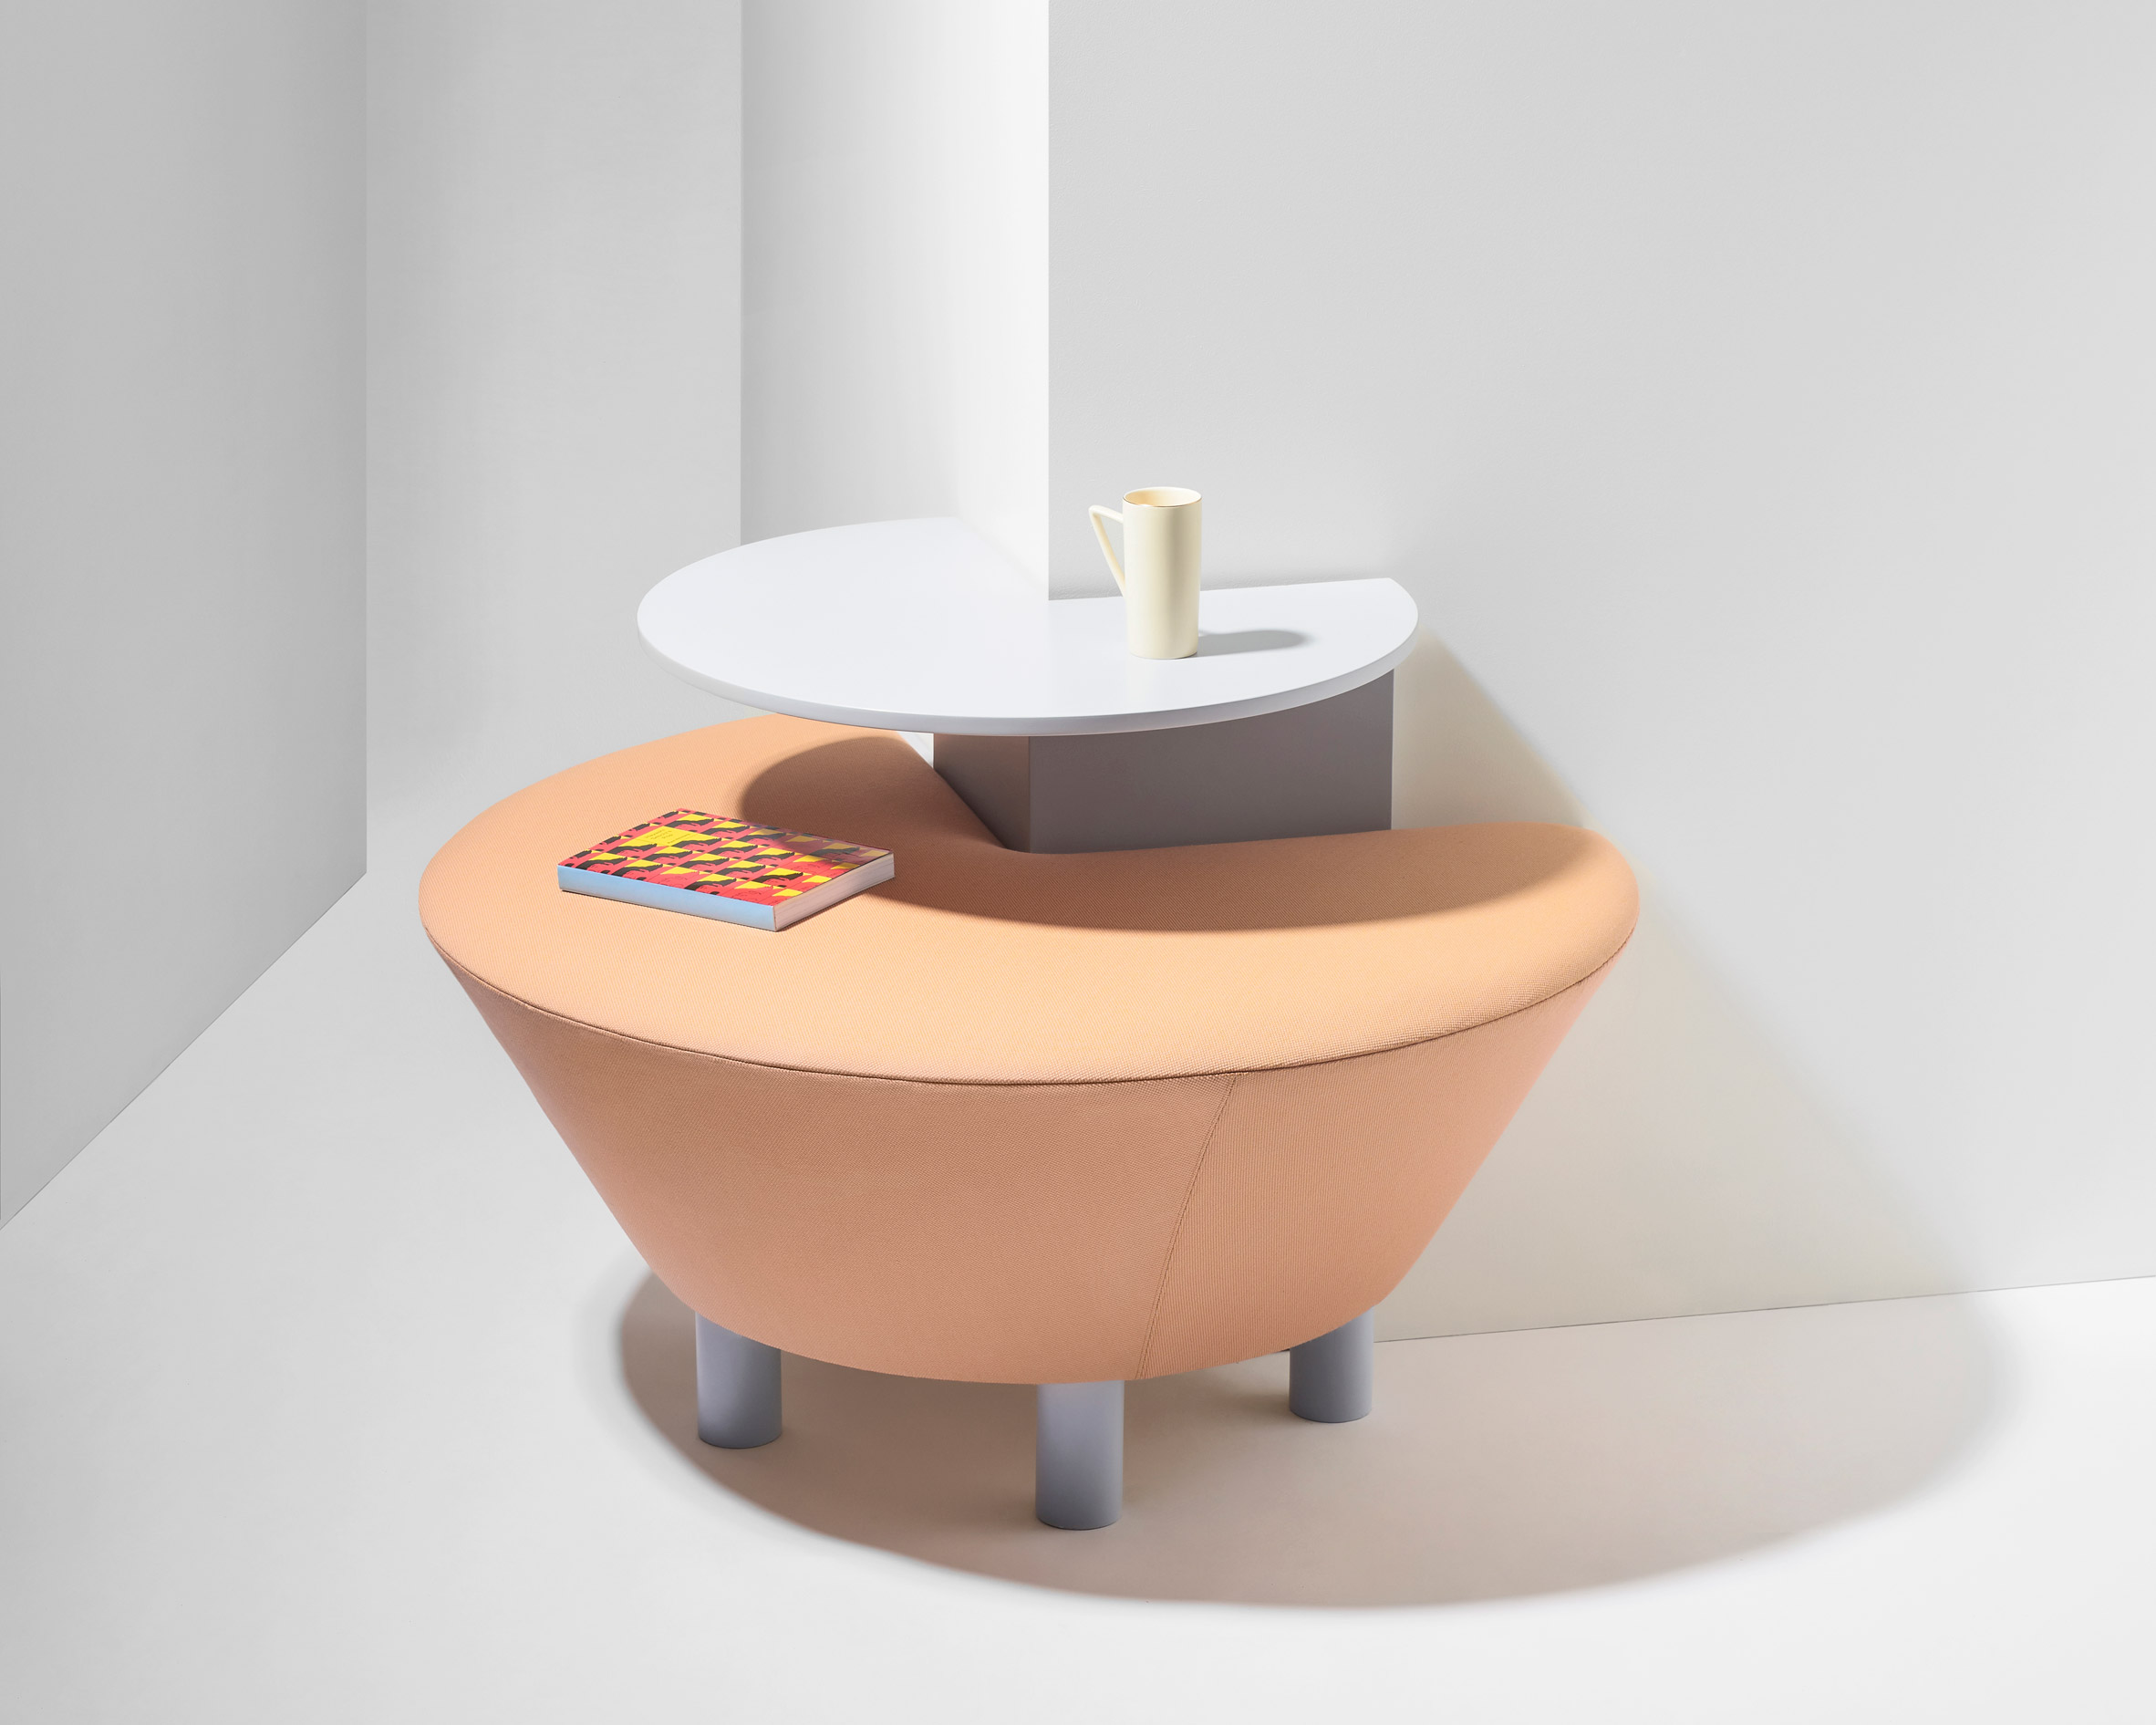 Seray Ozdemir designs furniture for corridors